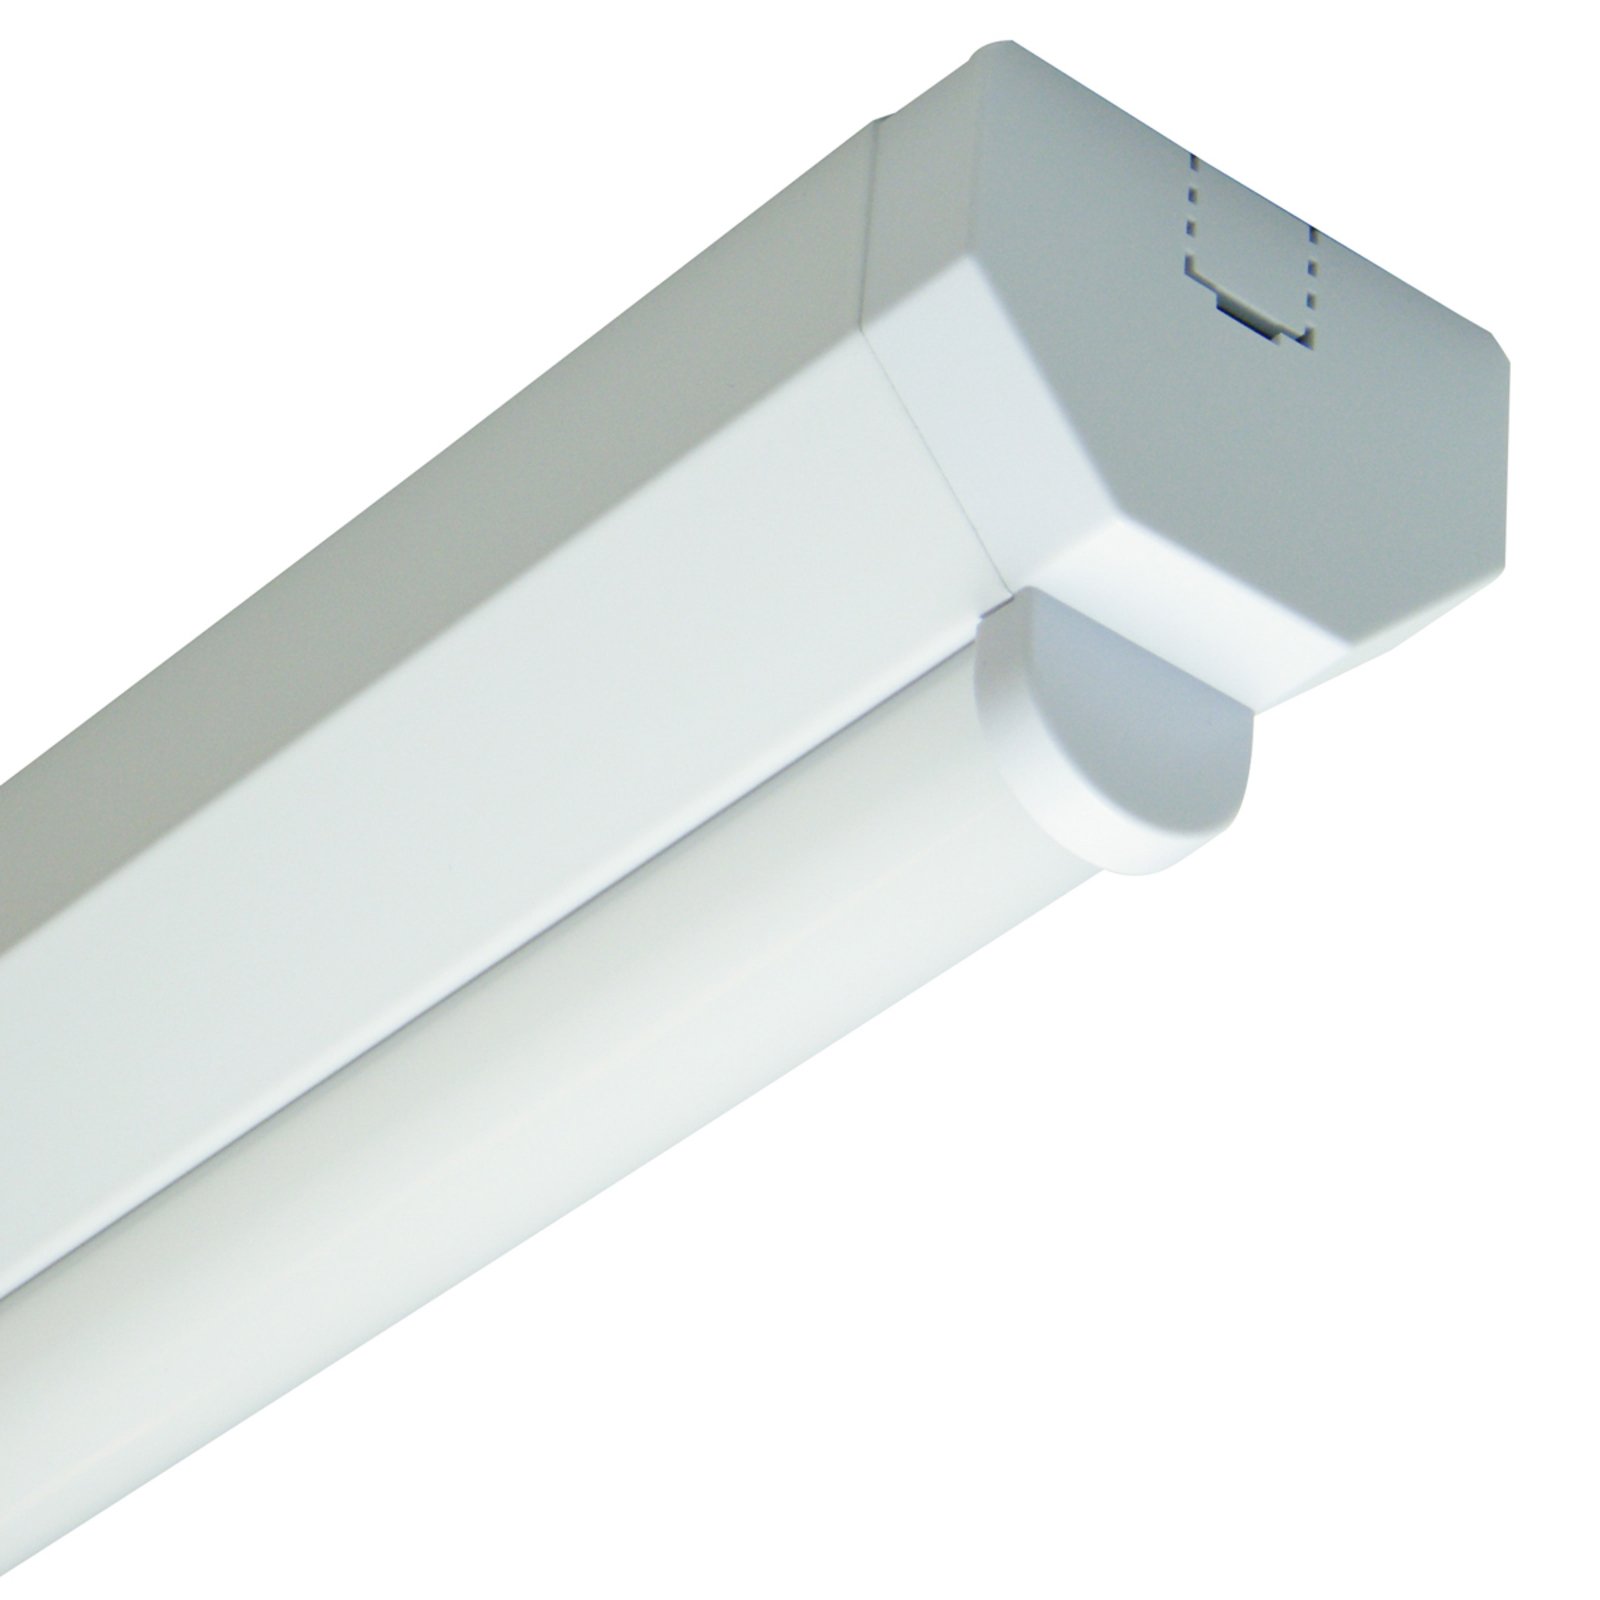 Plafonnier universel LED Basic 1 - 60cm